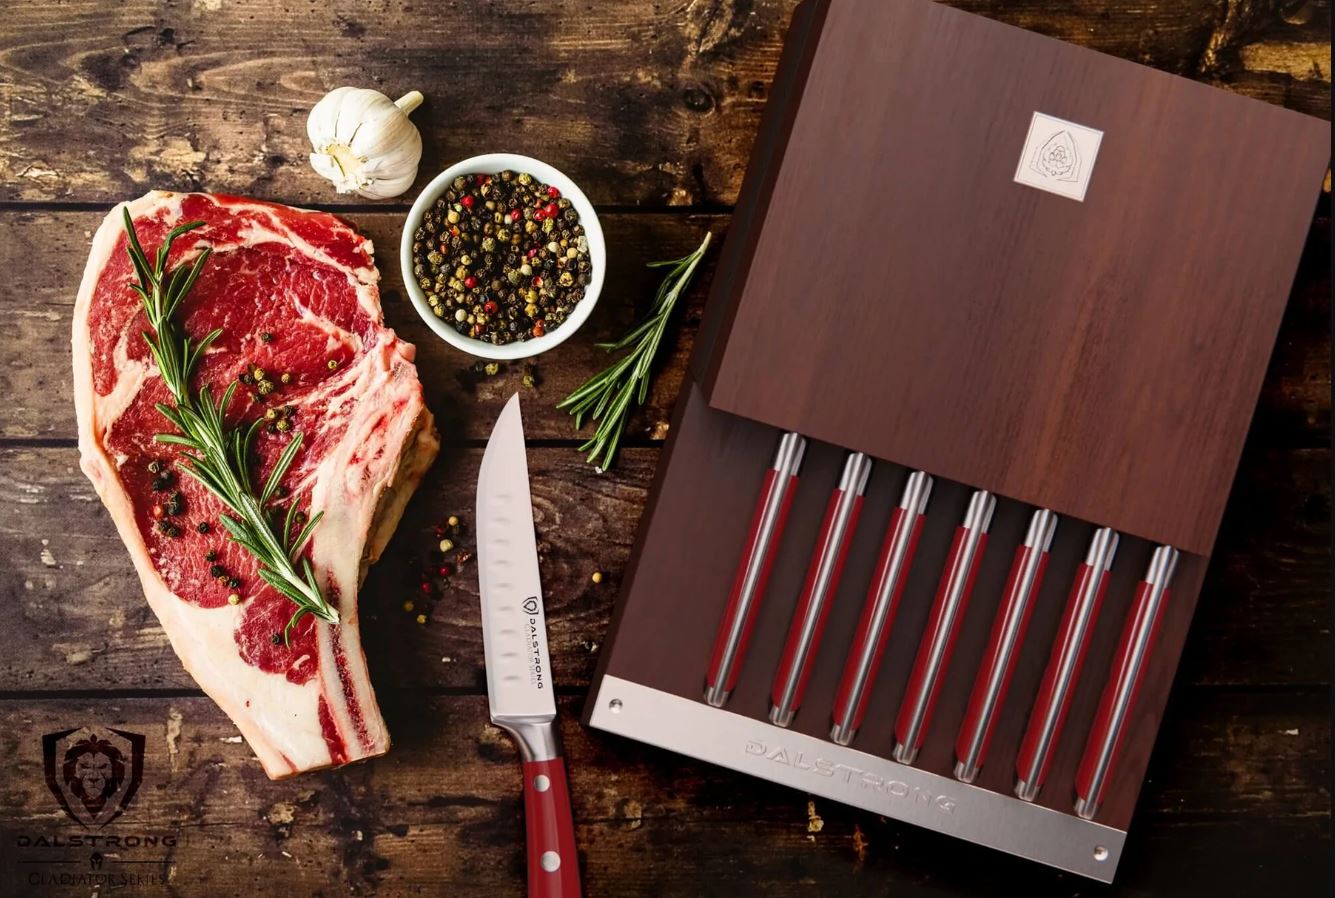 Basics Premium 8-Piece Kitchen Steak Knife Set, Black